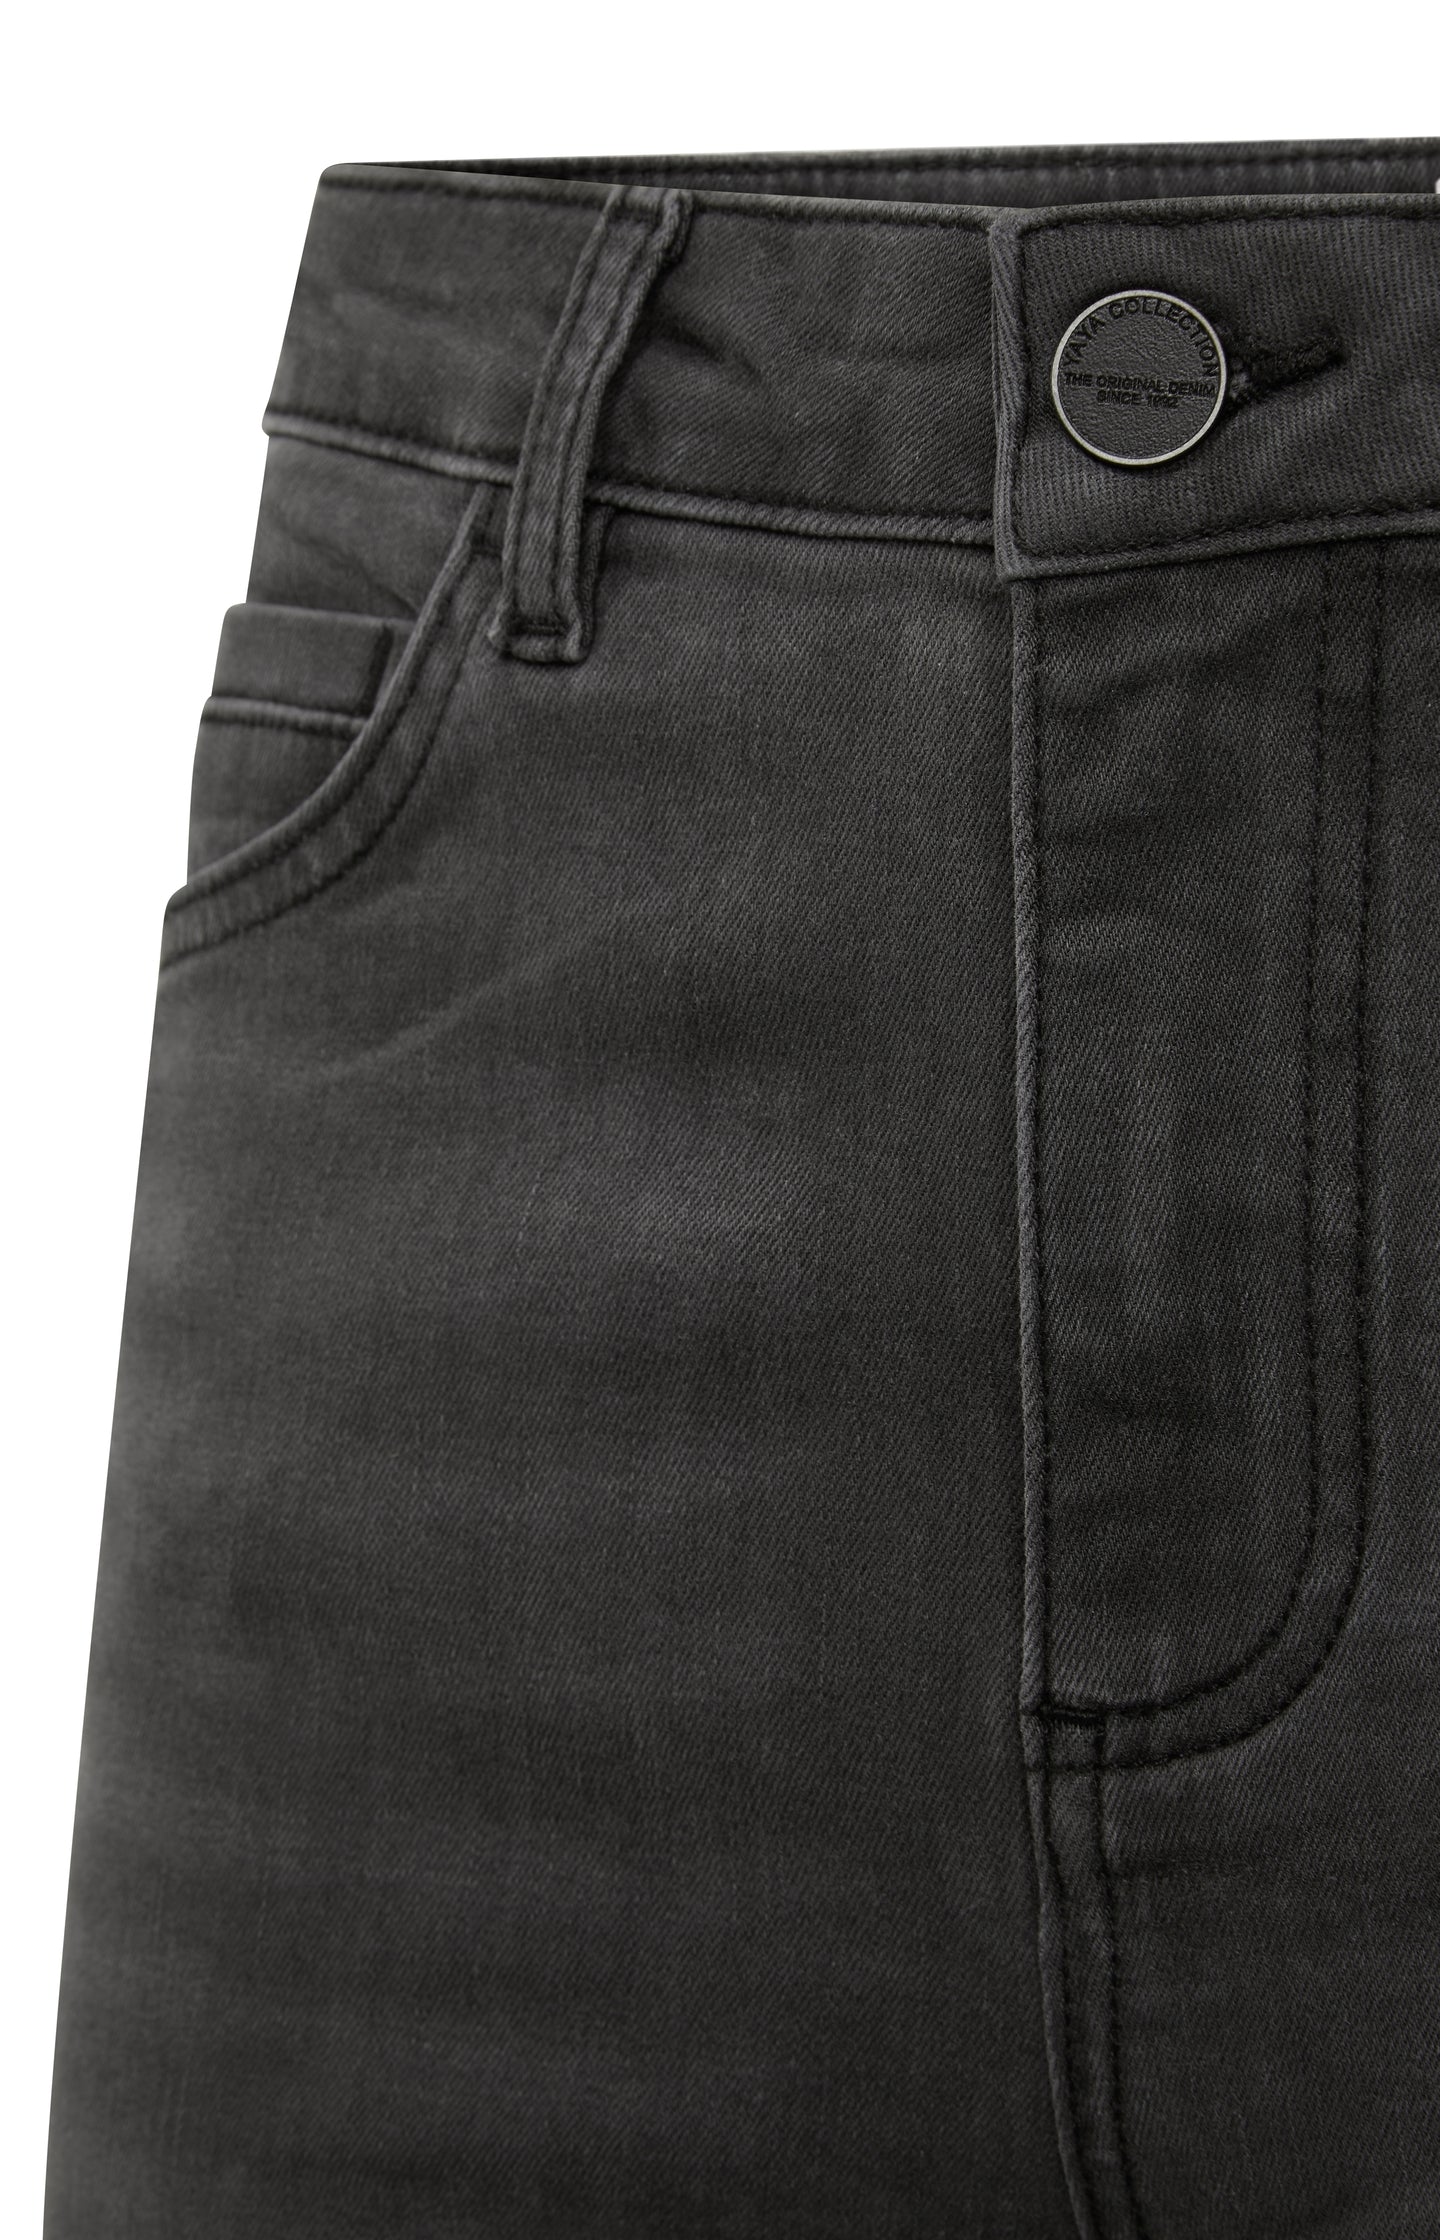 High waist skinny denim jeans in a cotton blend fabric